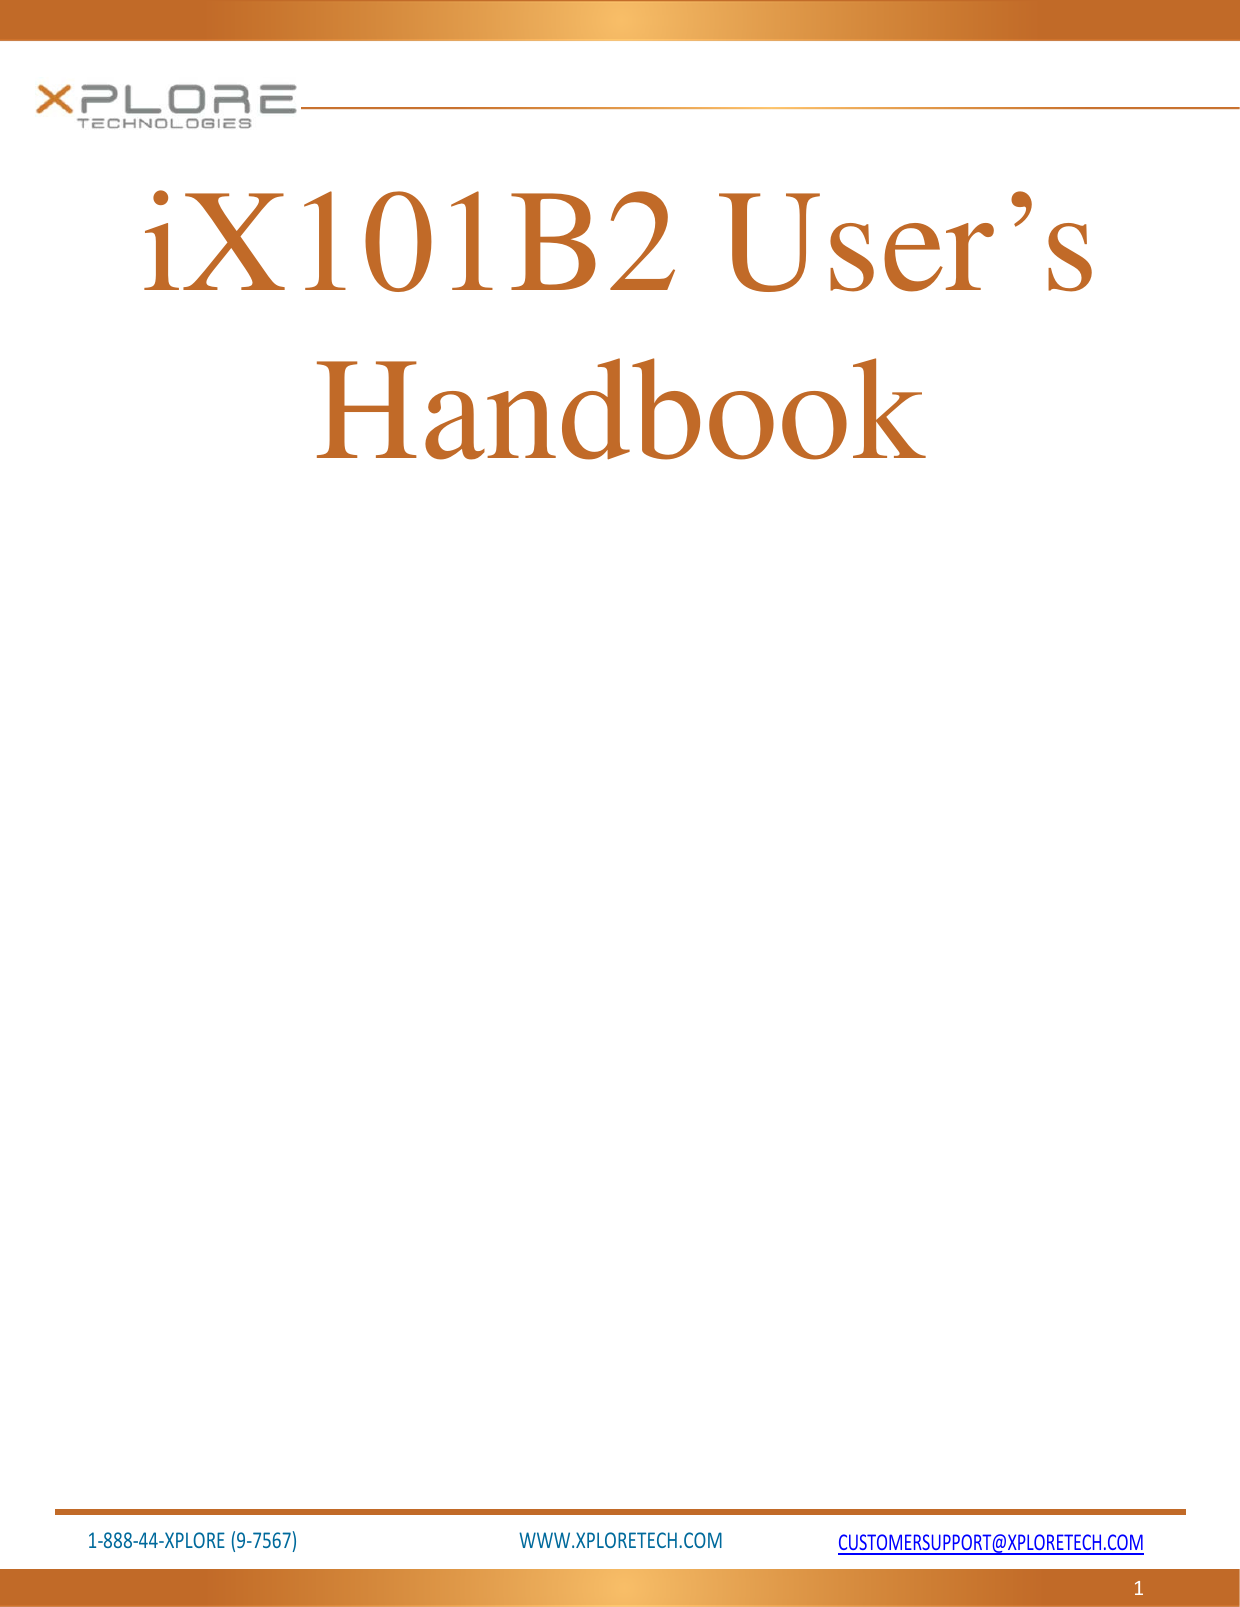 1‐888‐44‐XPLORE(9‐7567)WWW.XPLORETECH.COMCUSTOMERSUPPORT@XPLORETECH.COM1iX101B2 User’s Handbook 